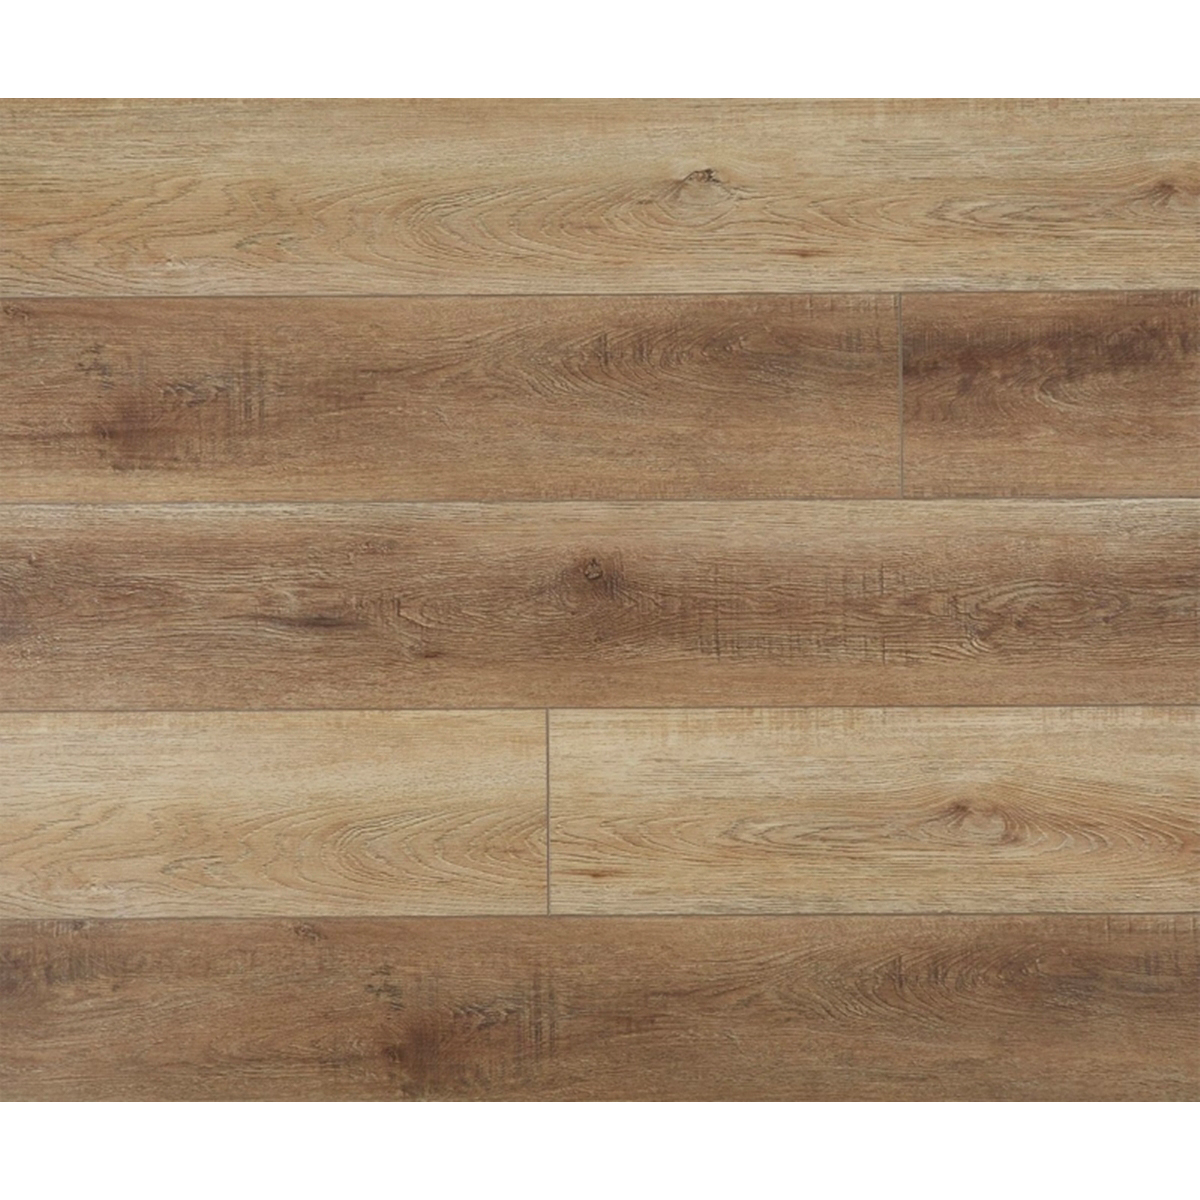 CVP102G03 Luxury Plank with Pad, 48 in L, 7 in W, Beveled Edge, Wood Look Pattern, Vinyl